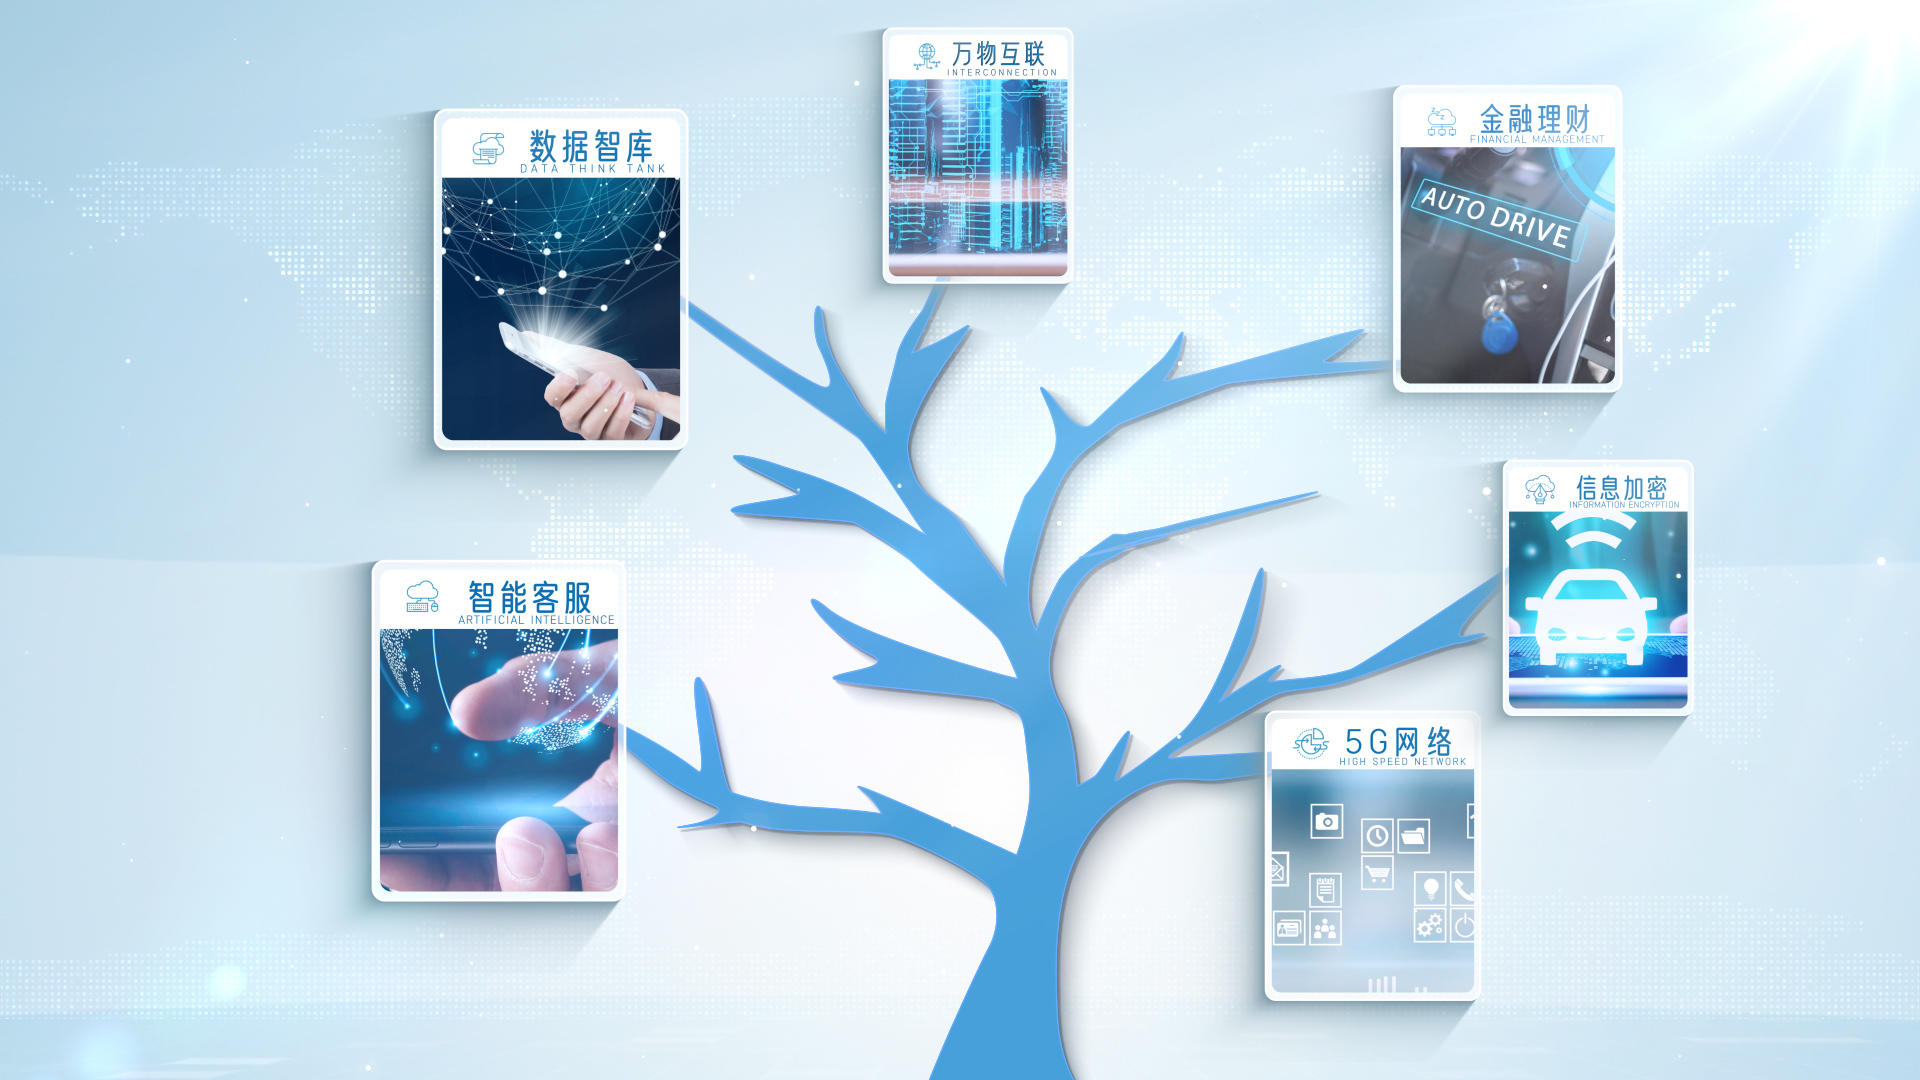 AE模板树状技术分类展示视频的预览图